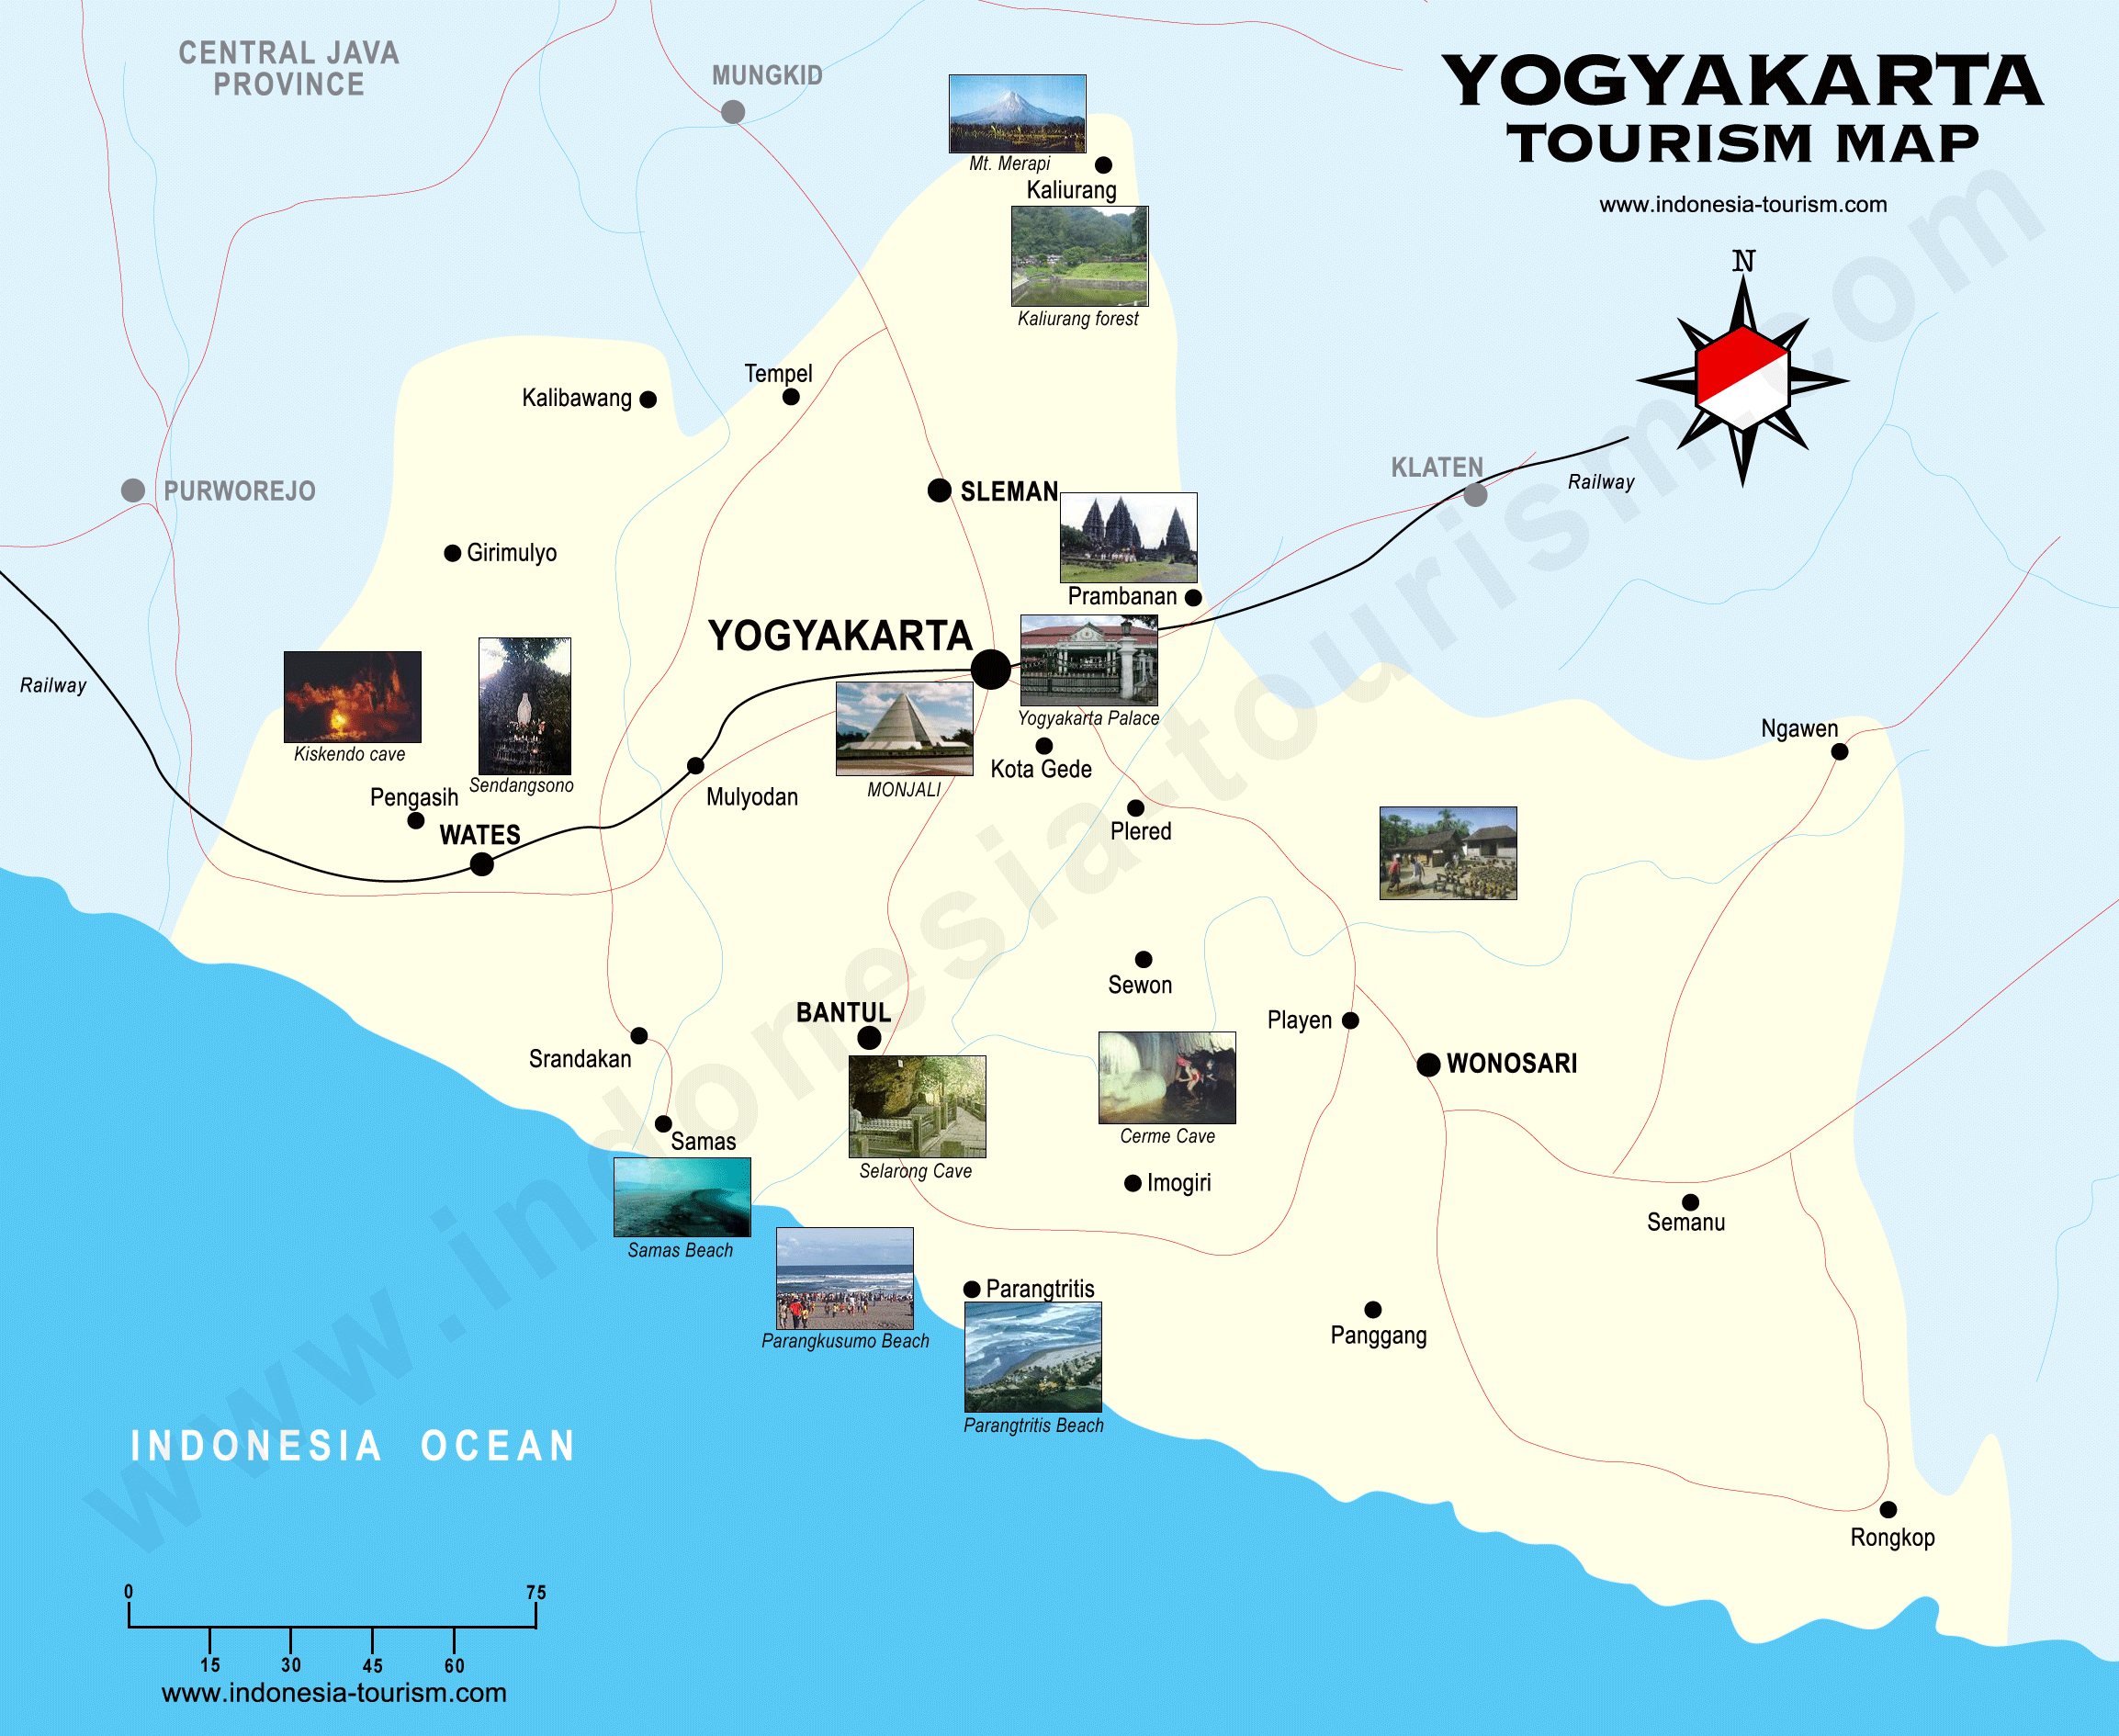 Yogyakarta tourism map